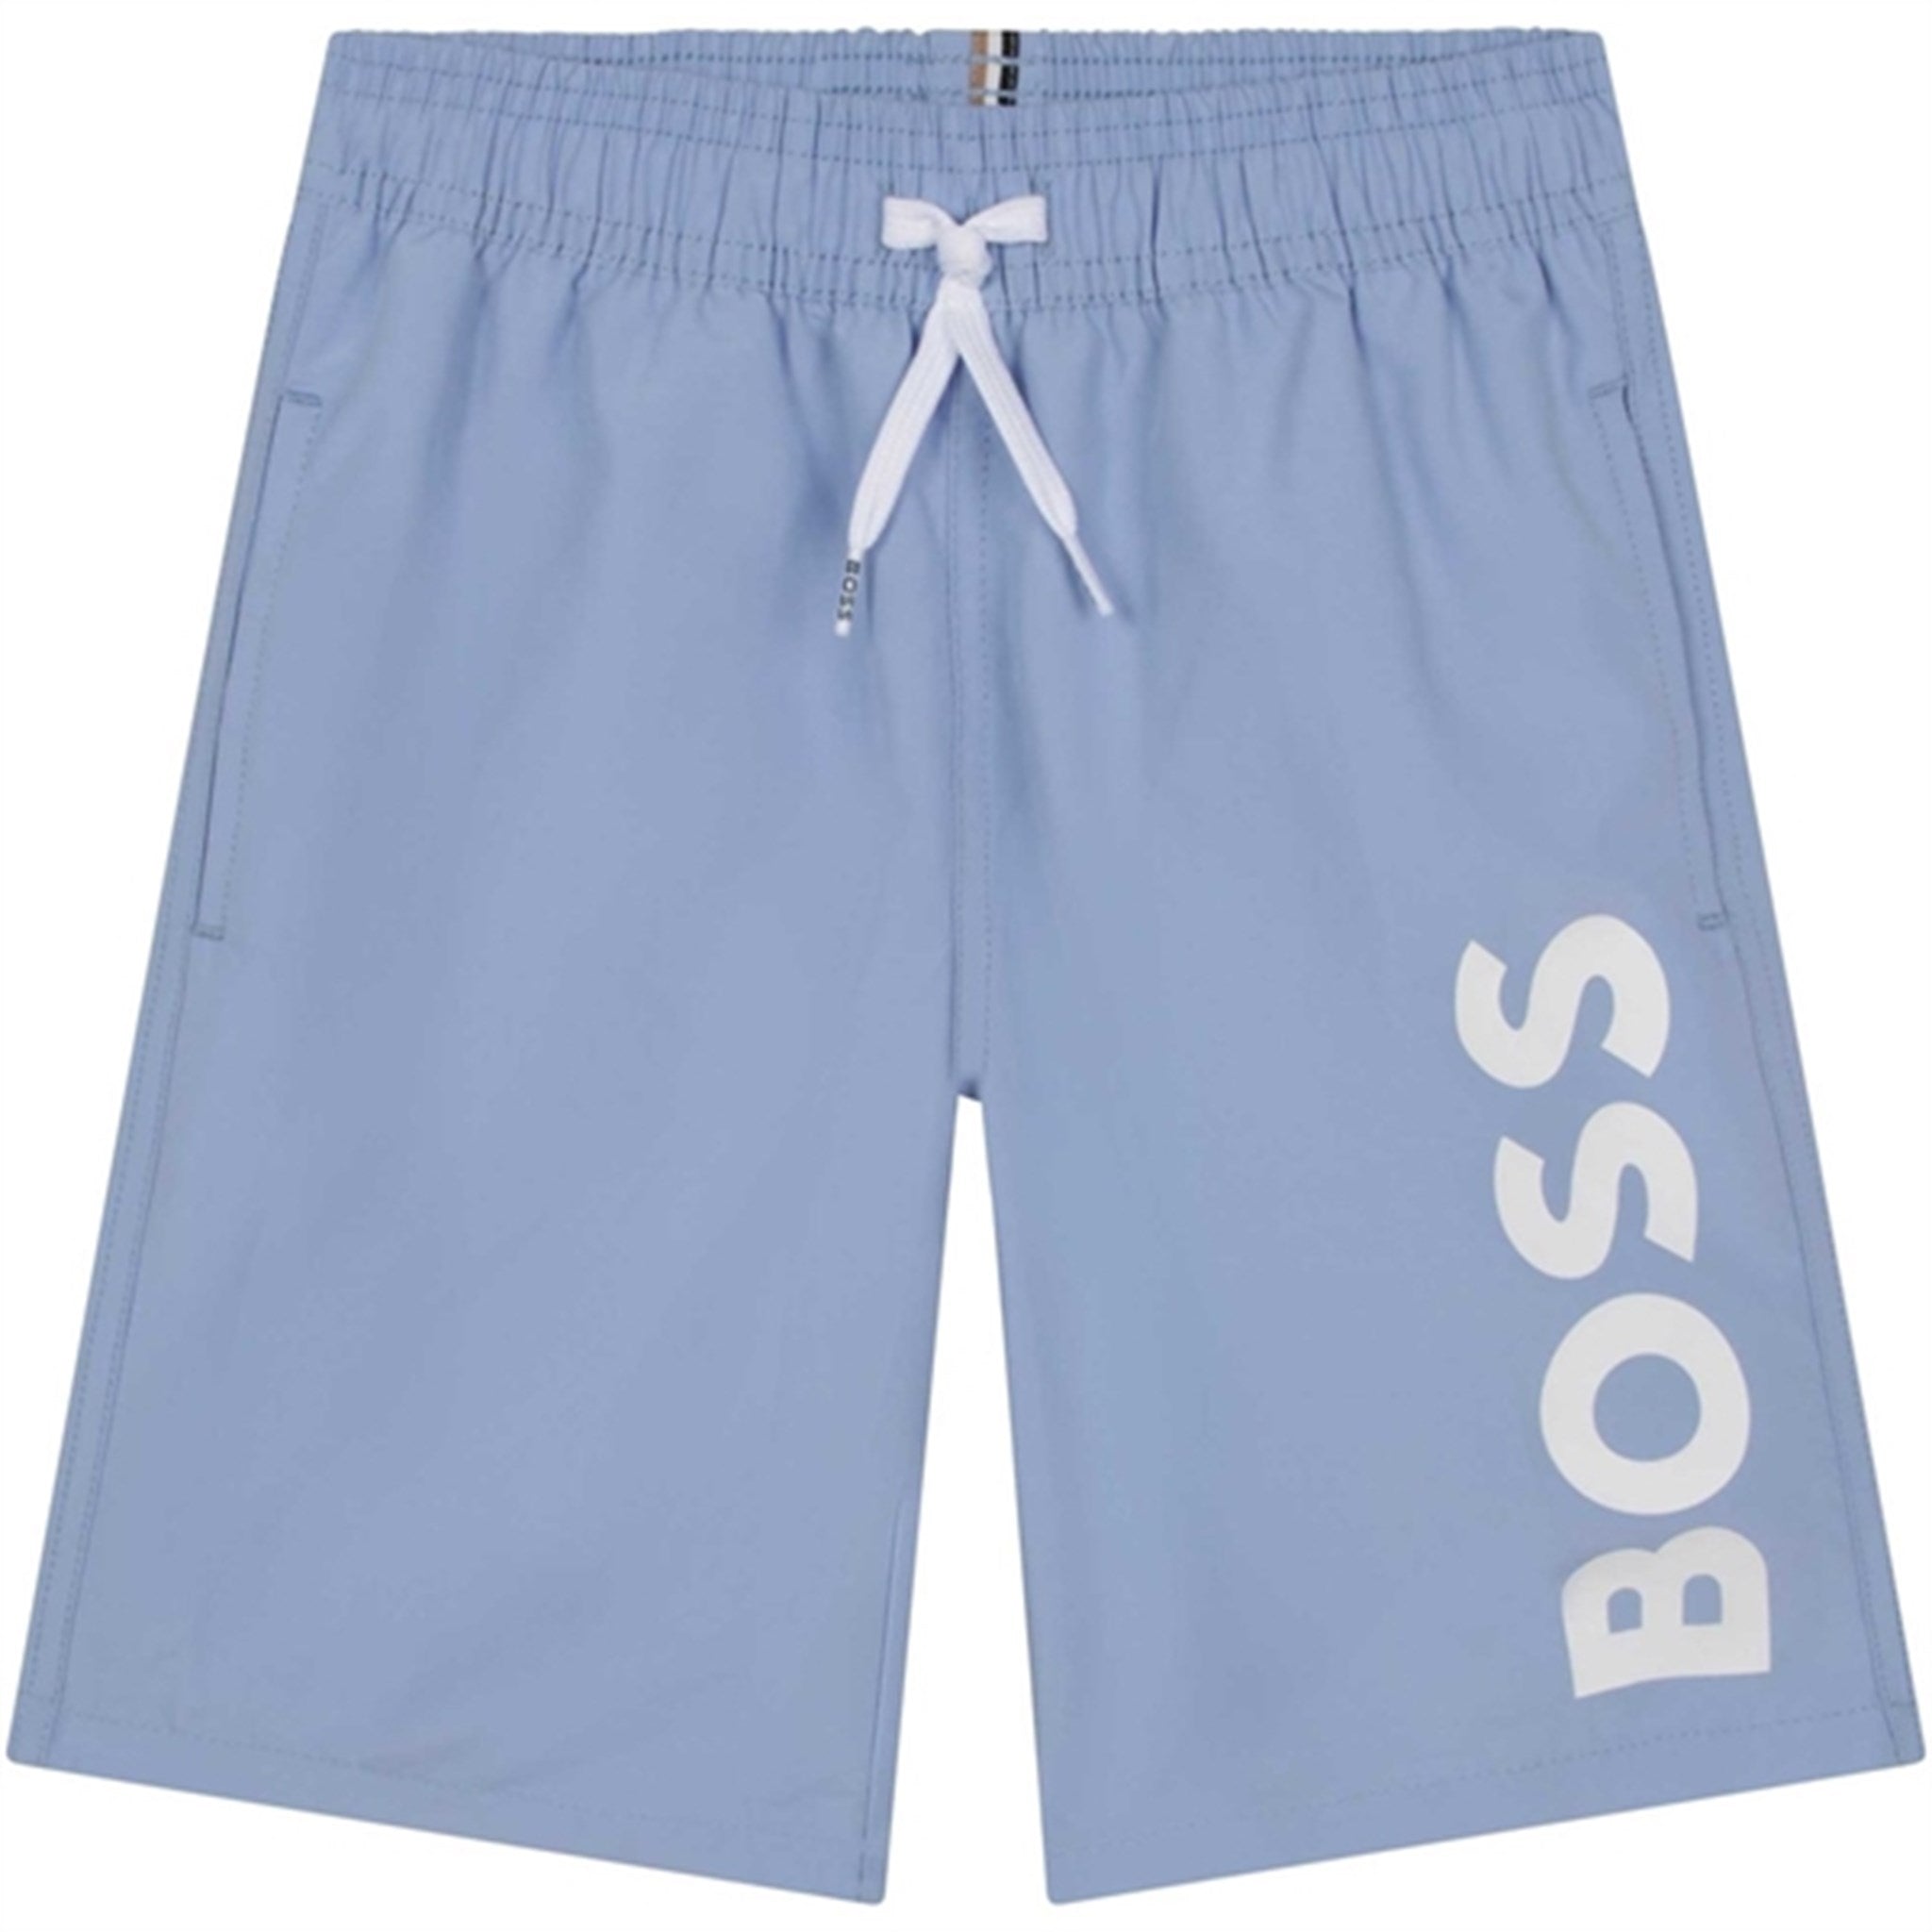 Hugo Boss Swim Shorts Pale Blue